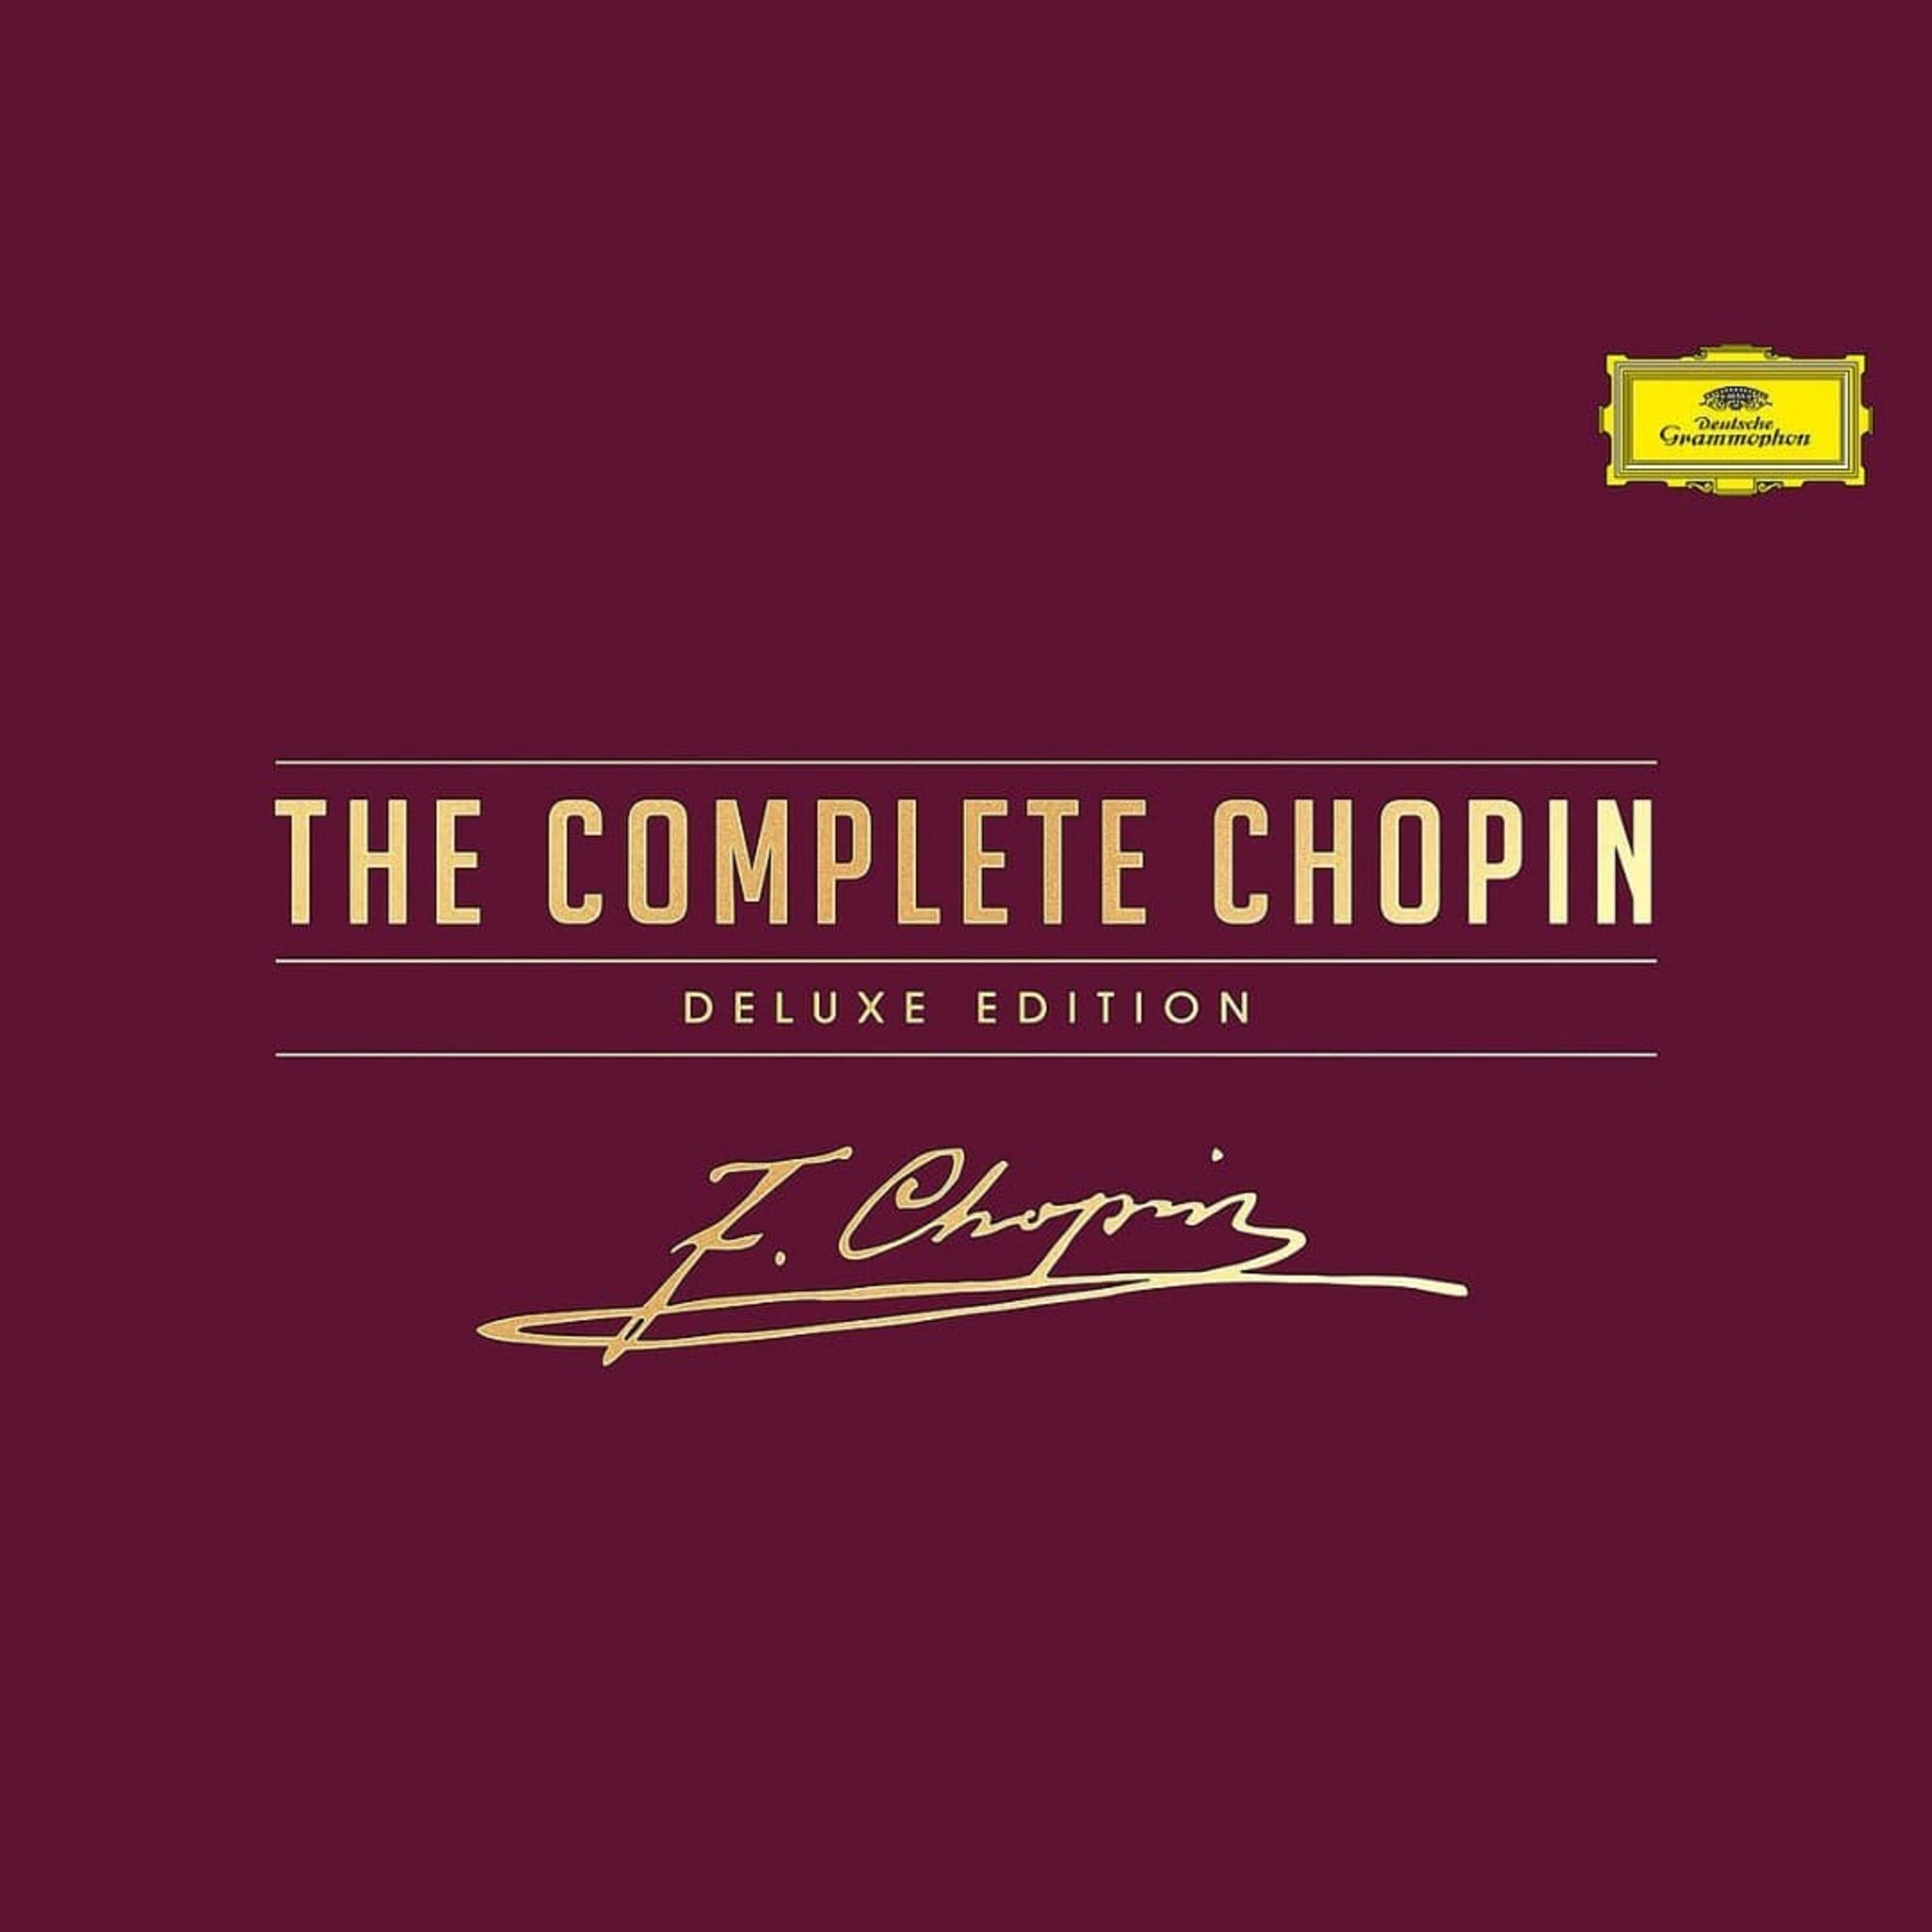 Deutsche　The　DVD)　Deluxe　Argerich　Grammophon　Der　Martha　Edition　offizielle　Shop　(20CDs　Complete　Chopin　Bundle